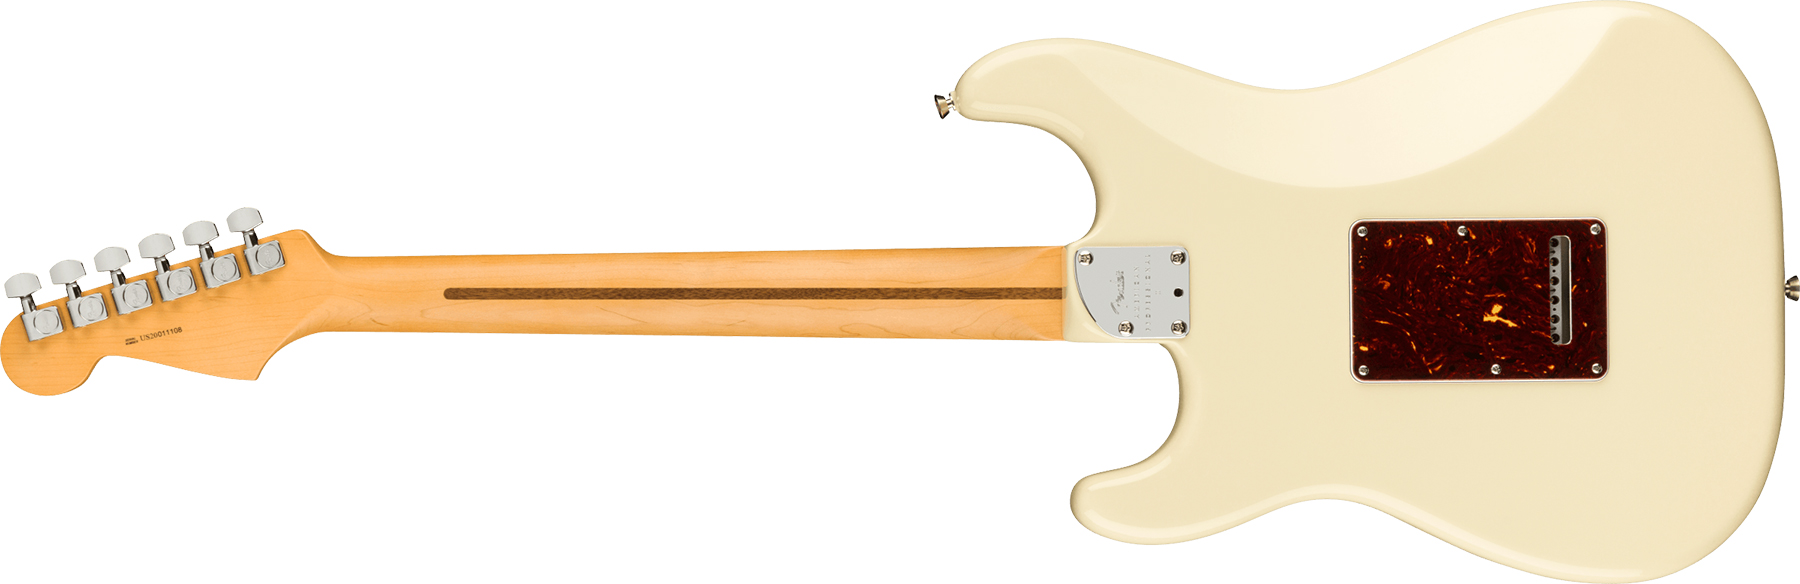 Fender Strat American Professional Ii Usa Rw - Olympic White - Str shape electric guitar - Variation 1